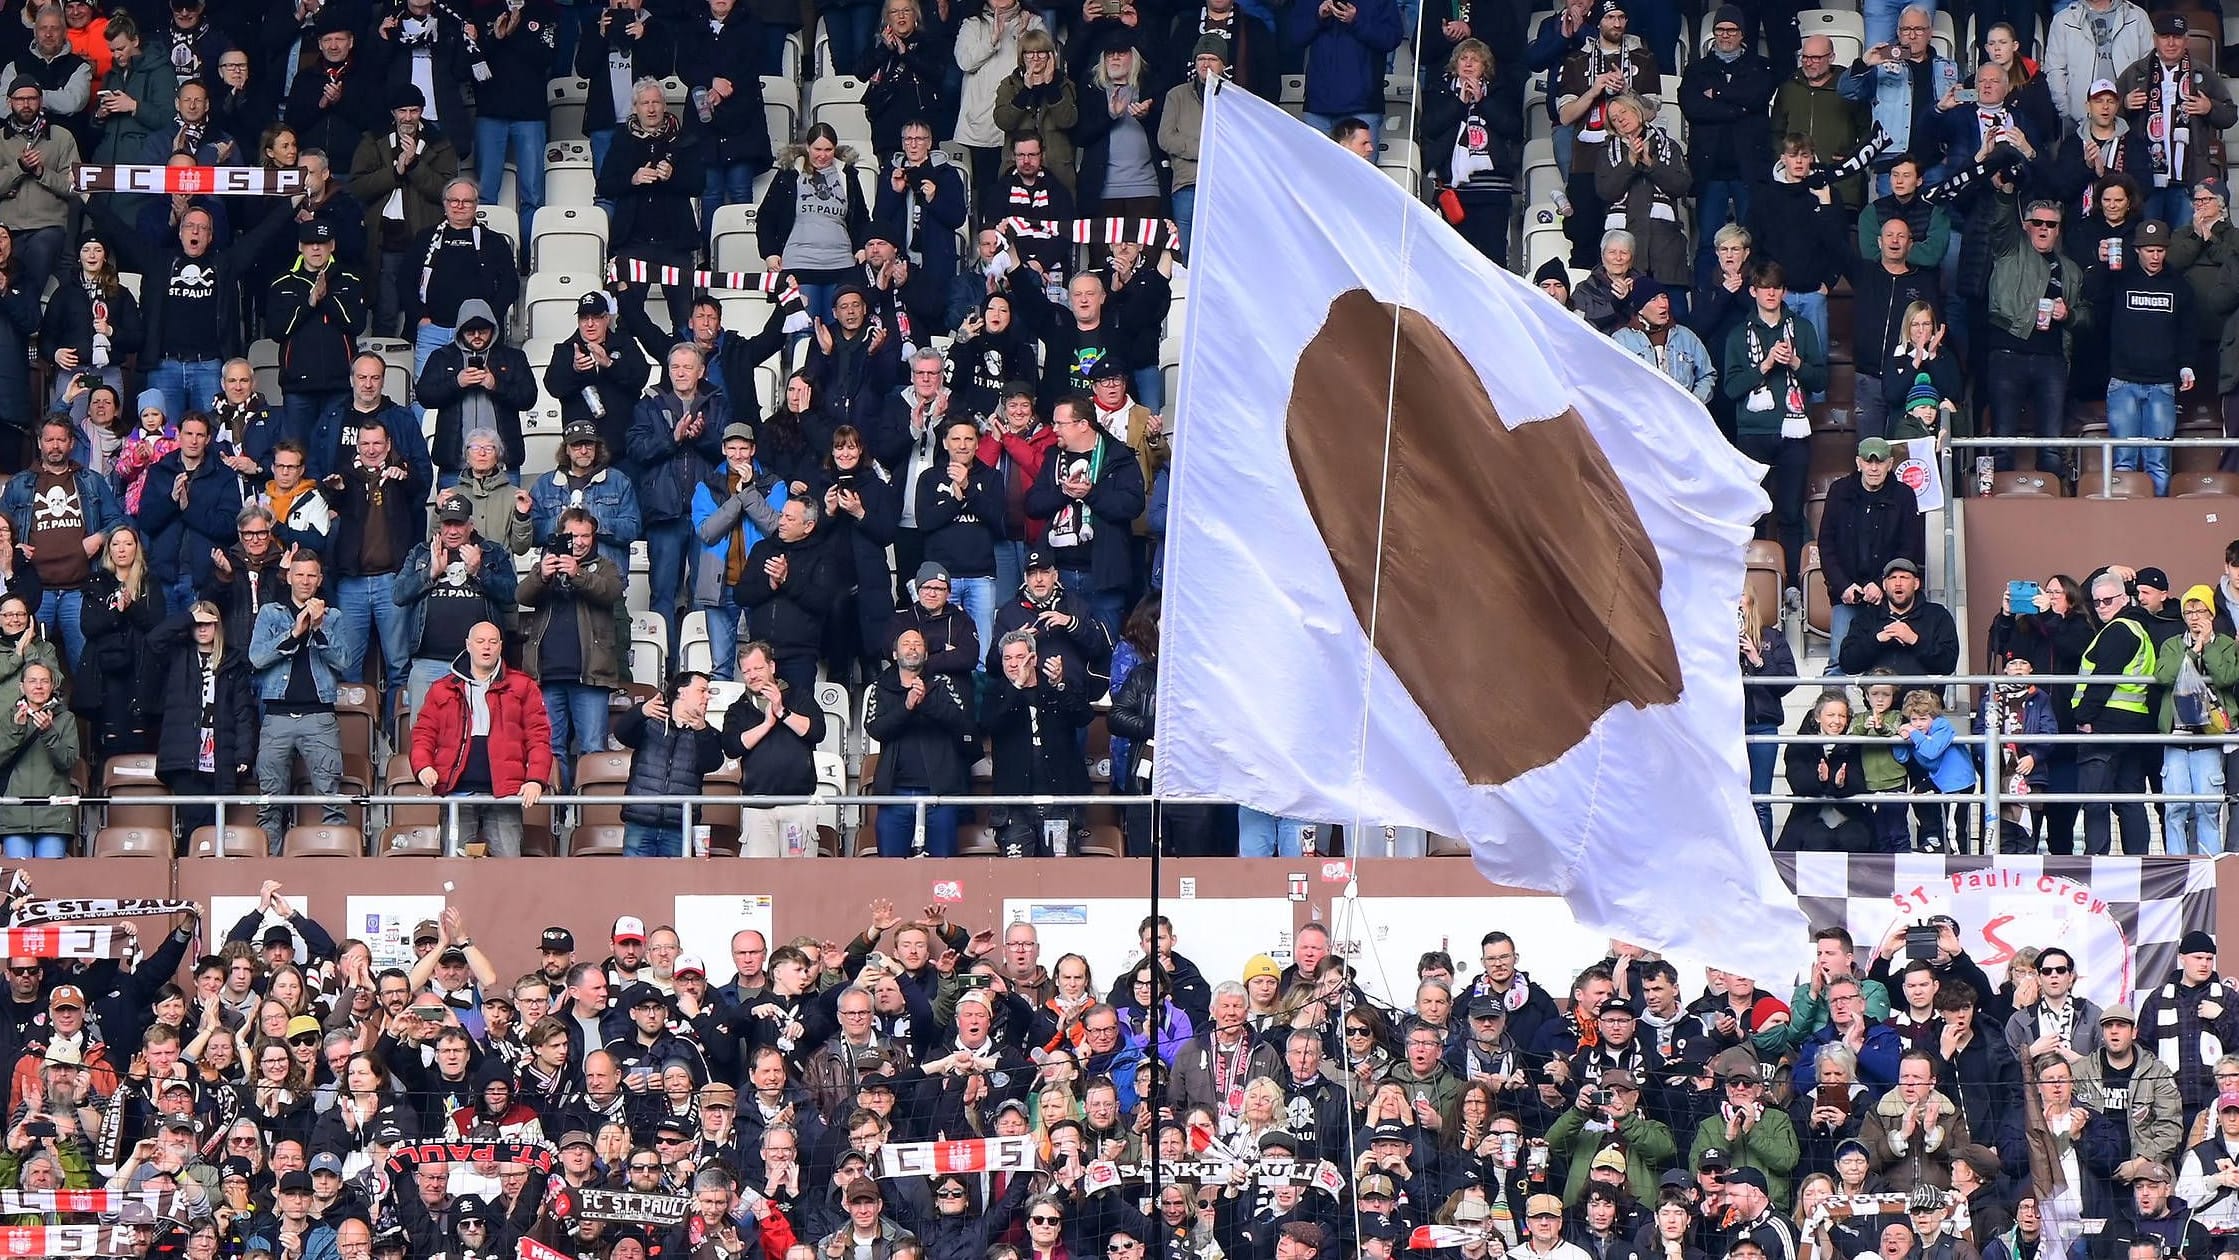 St. Pauli reist rond de Fan – Zusammenbruch voor KSC-Spiel